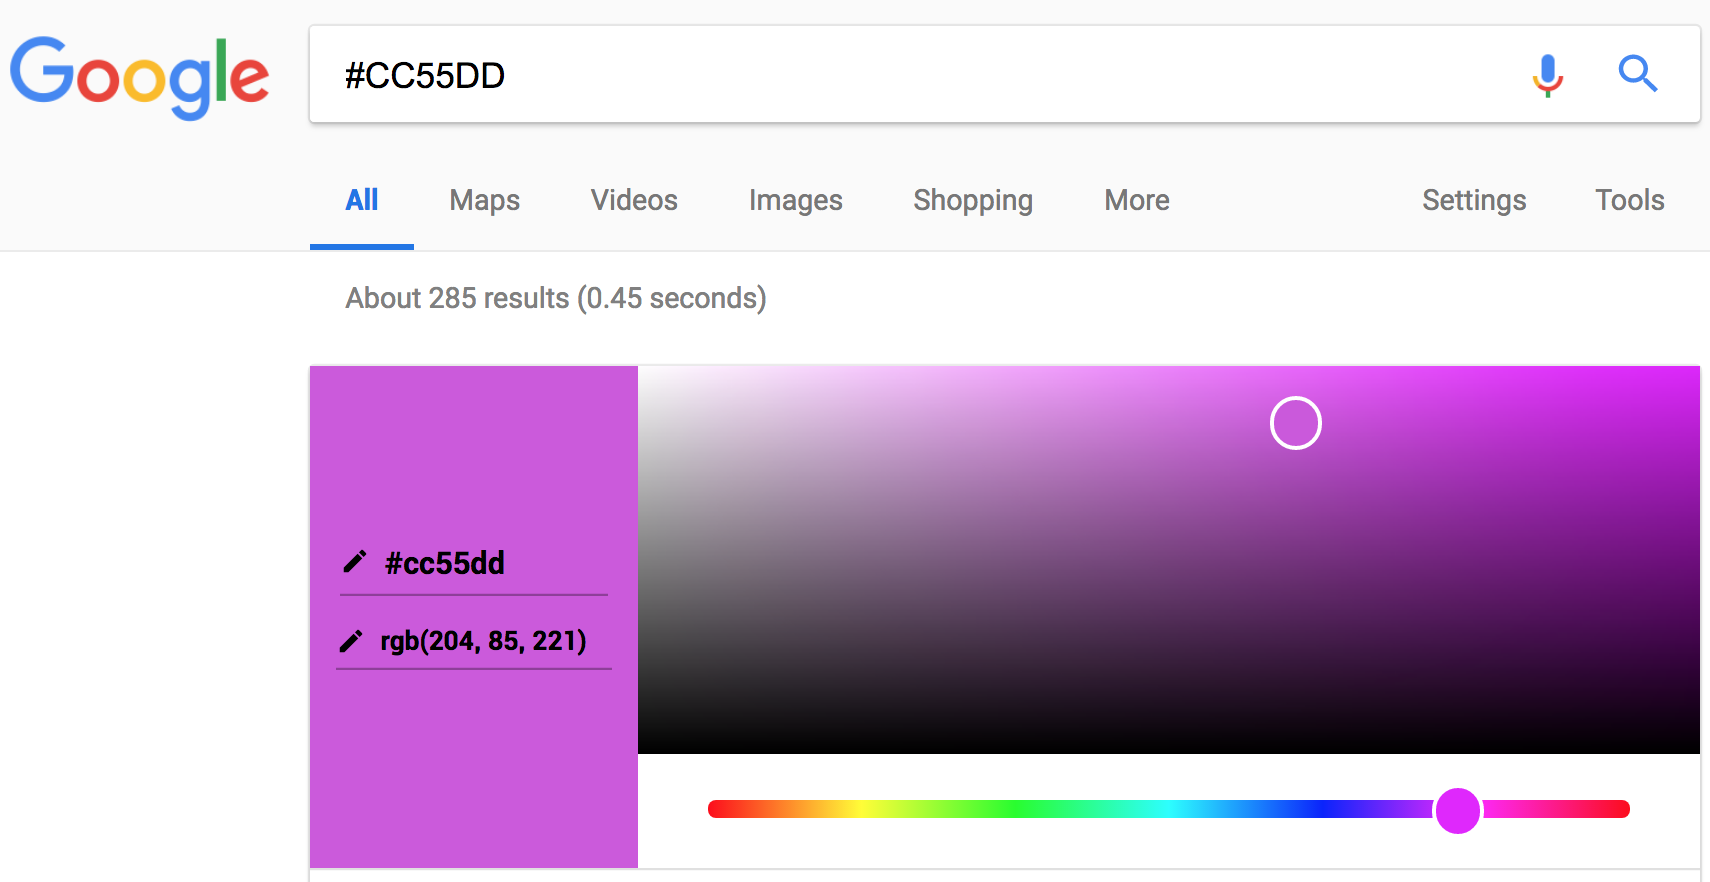 Netflix Colors - Hex and RGB Color Codes